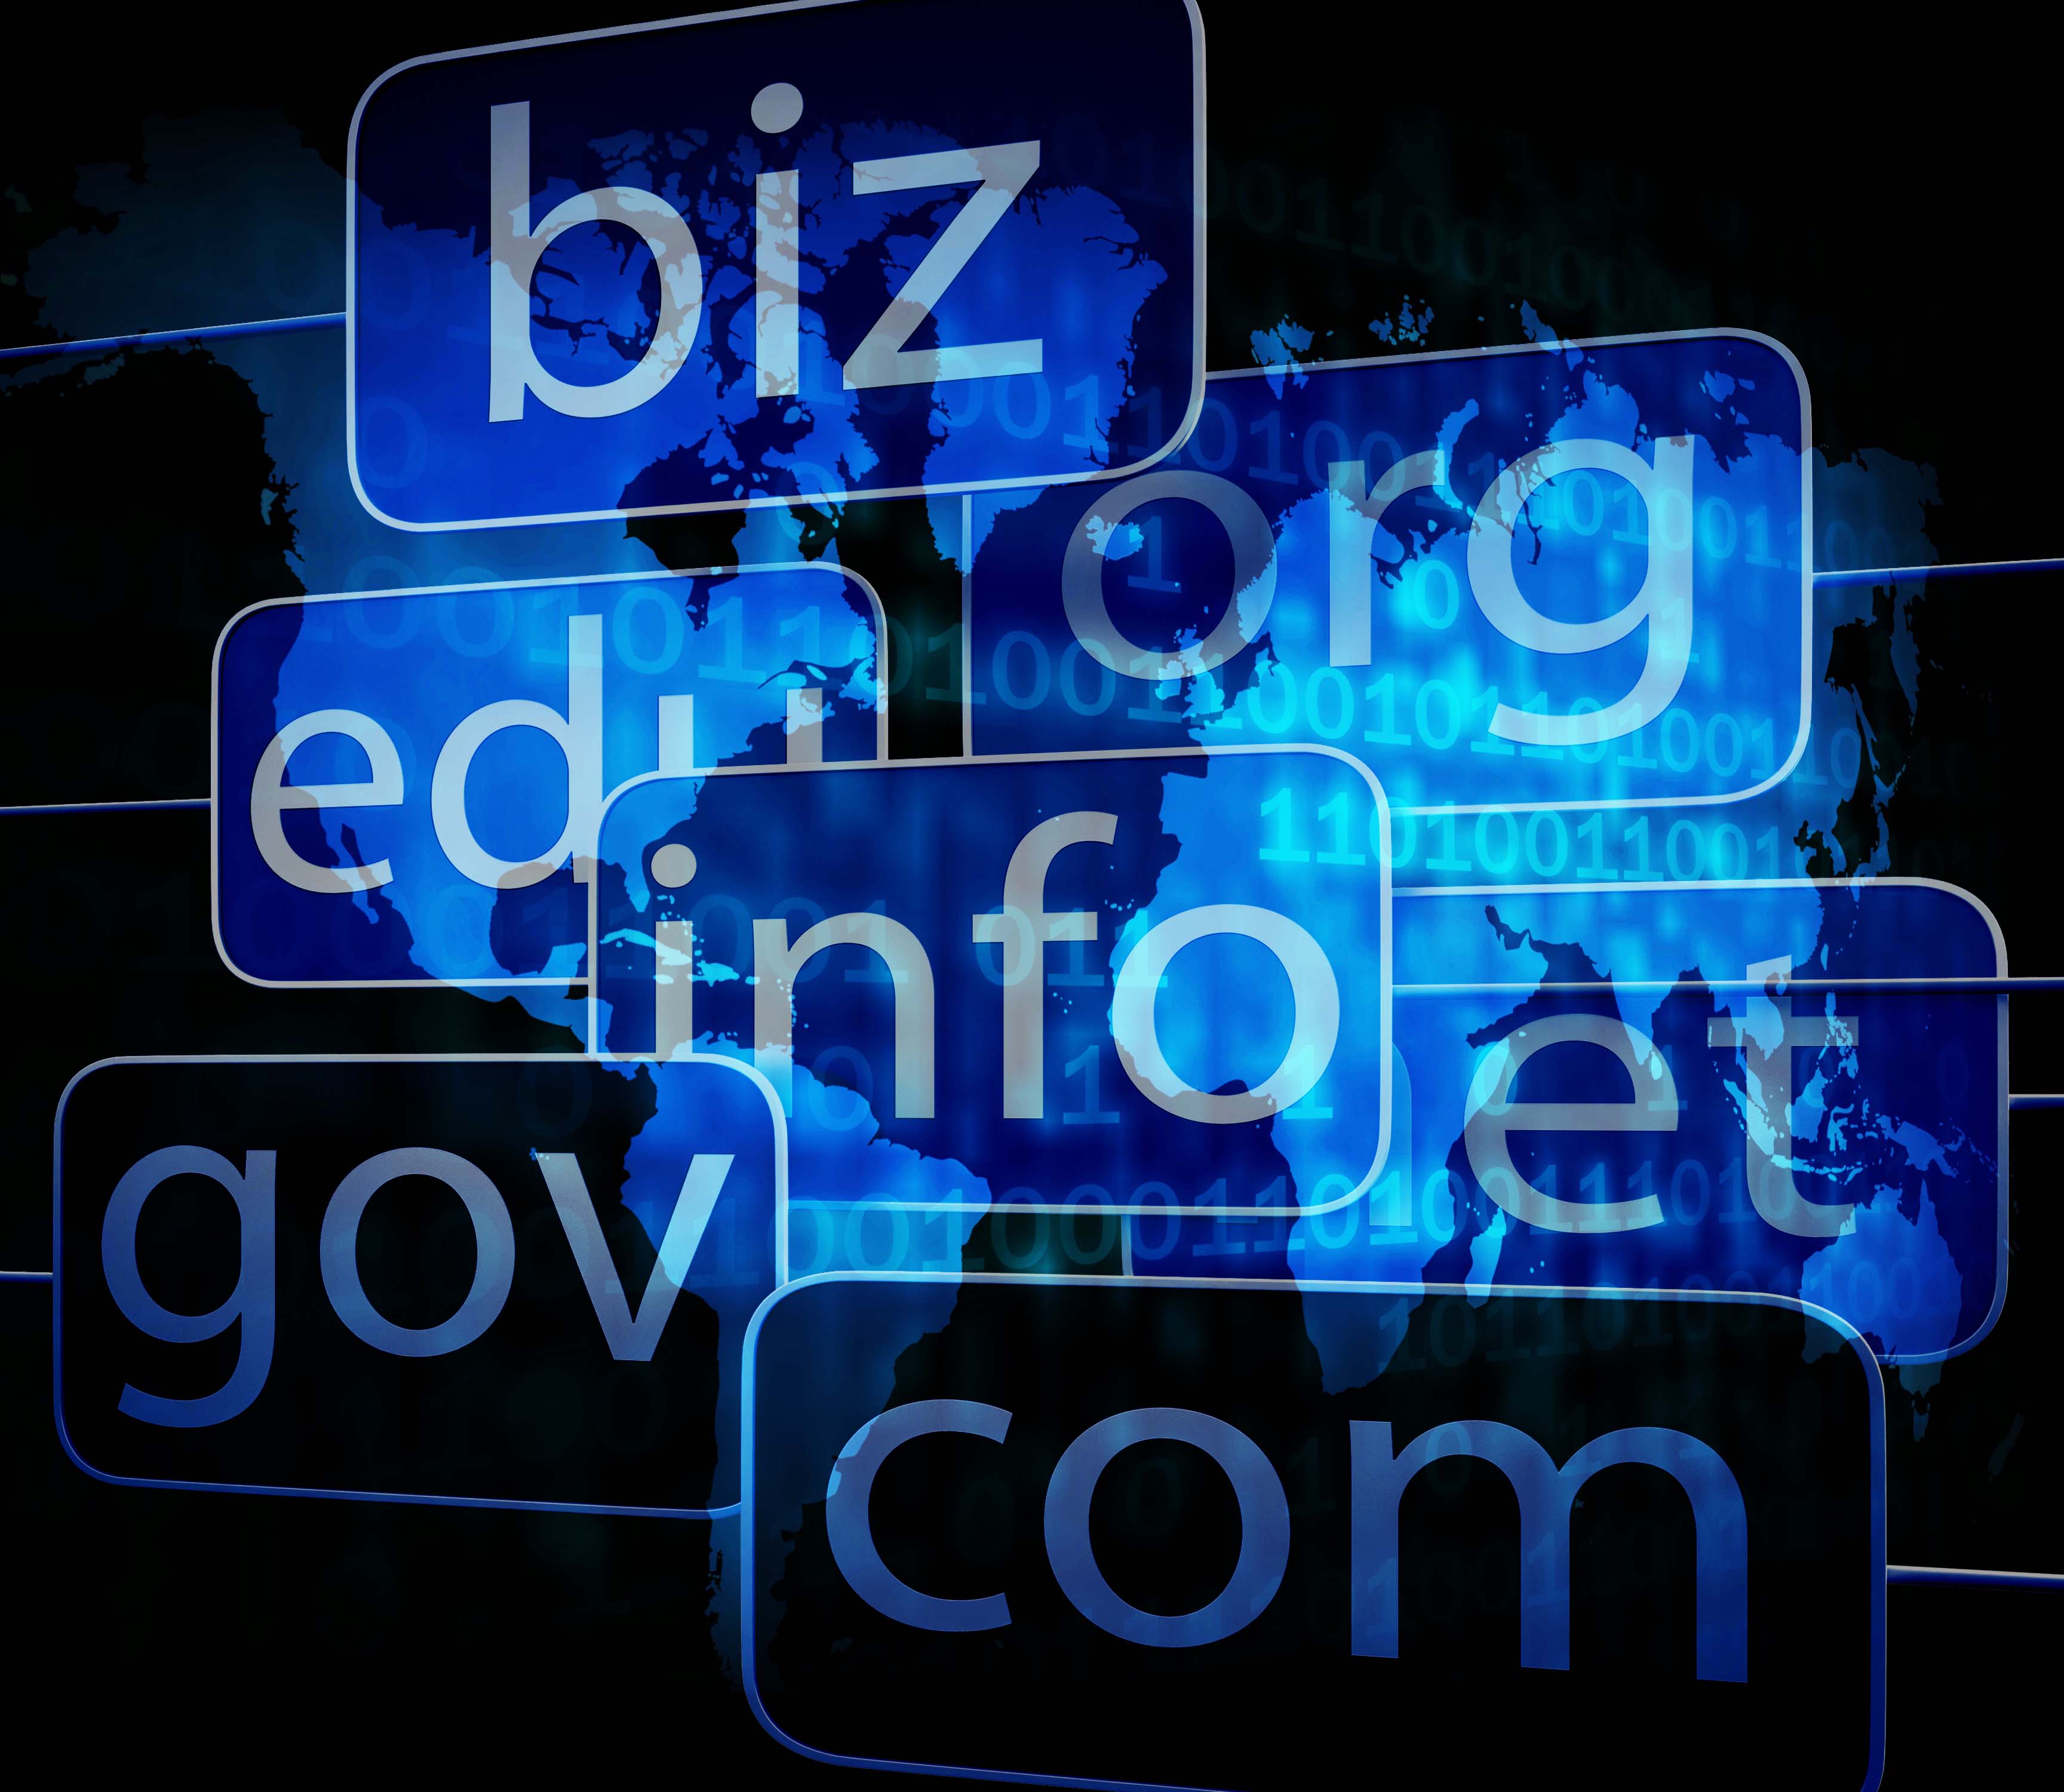 biz com net showing websites internet and seo